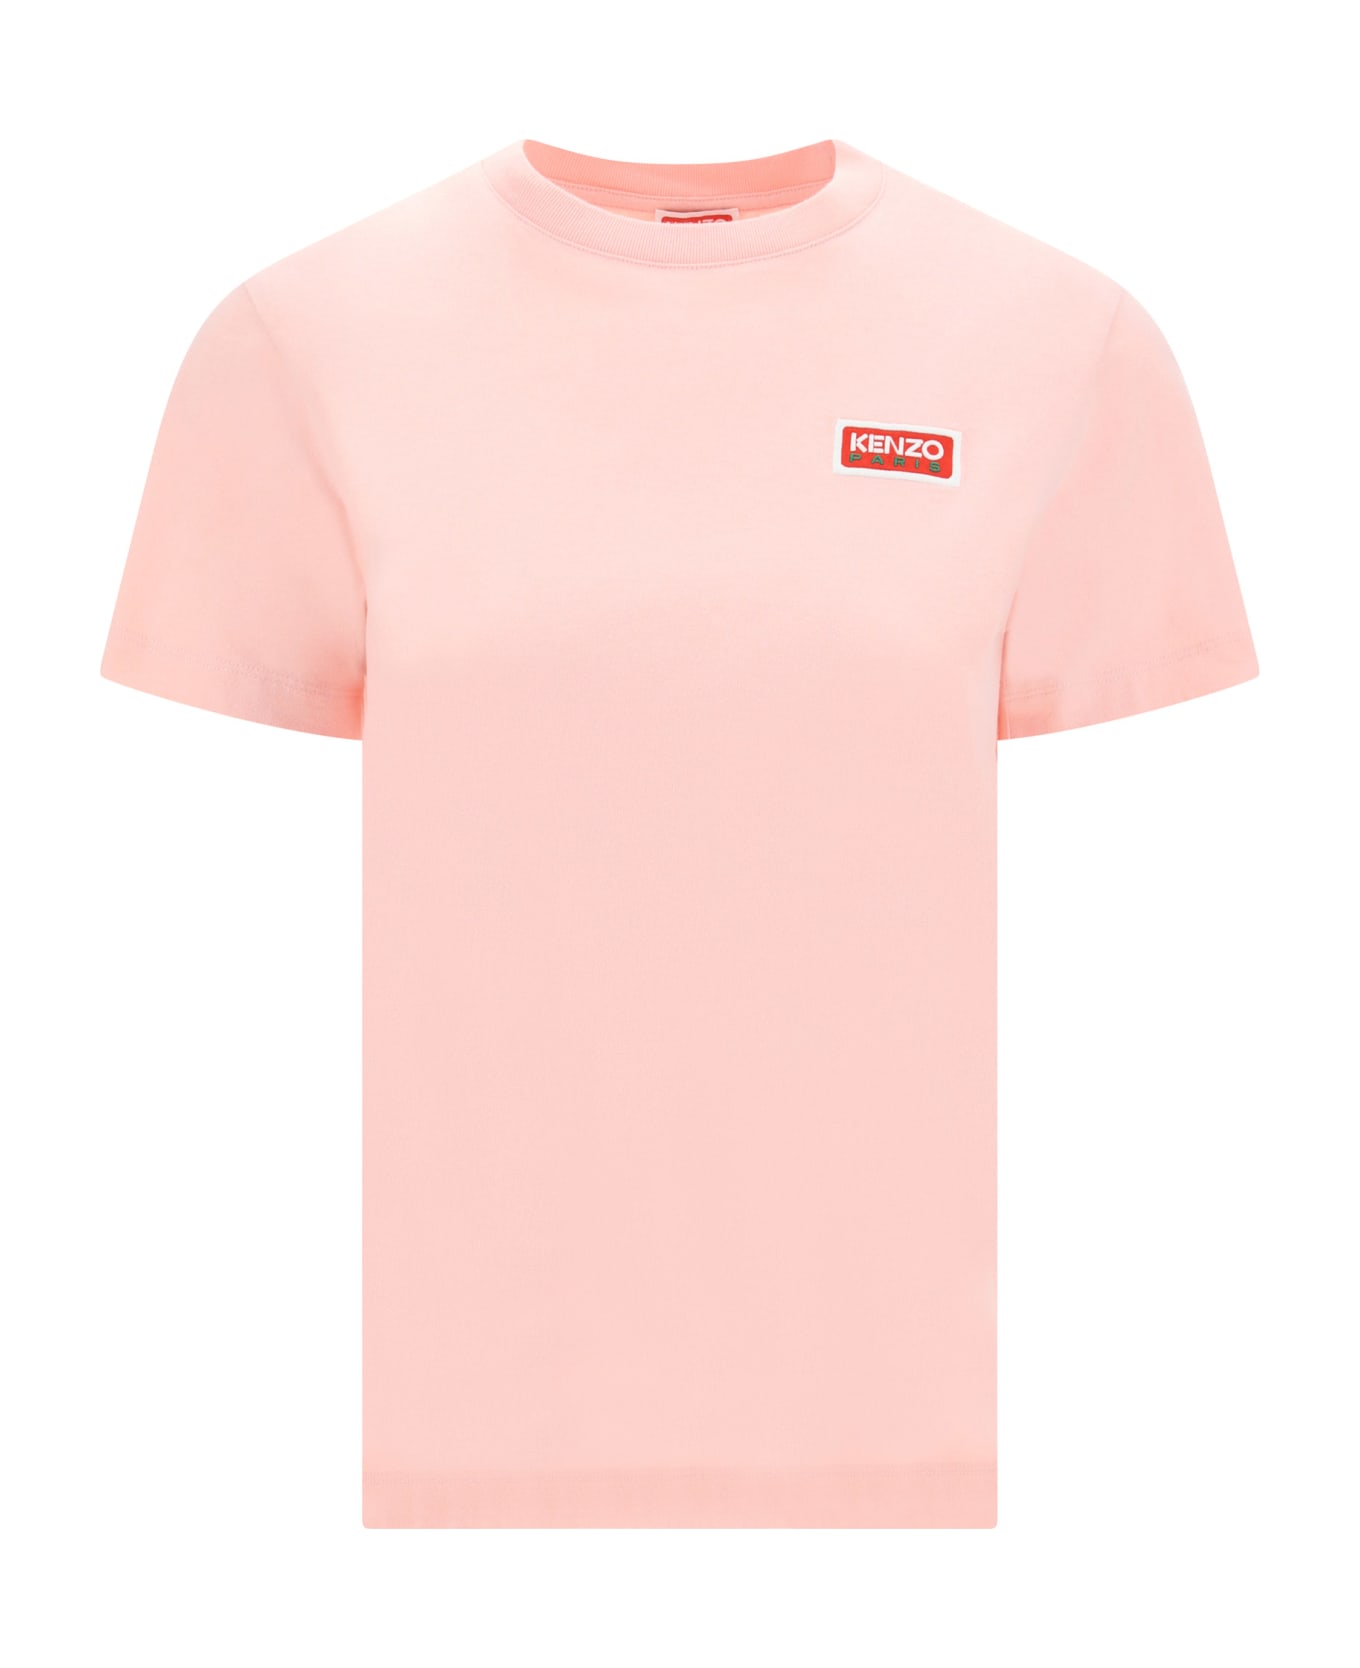 Kenzo Paris T-shirt - Rose Clair